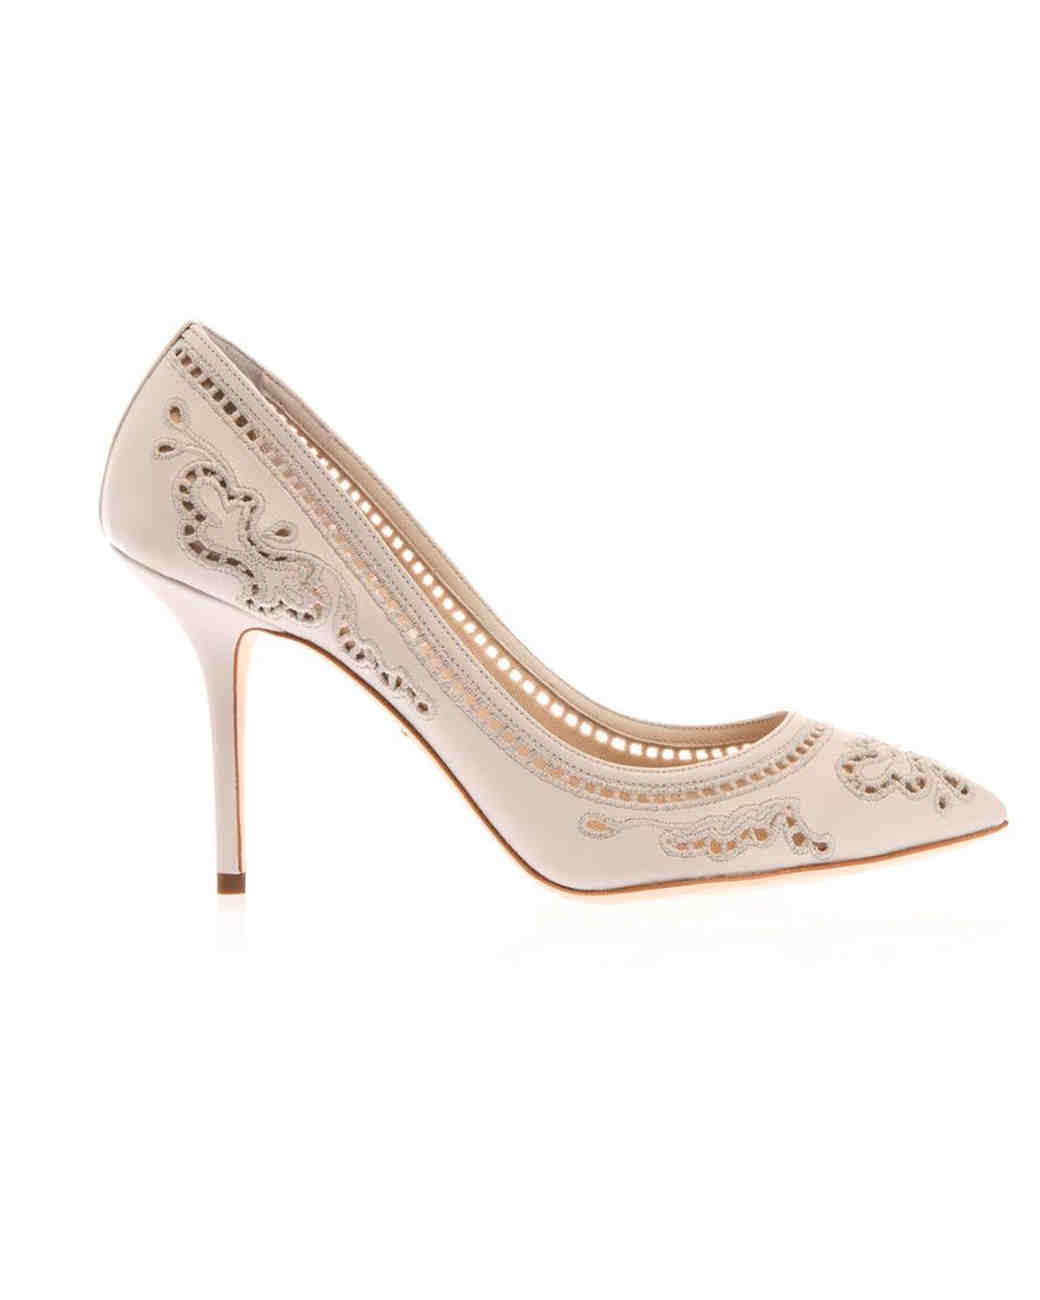 36 Best Shoes for a Bride to Wear to a Fall Wedding | Martha Stewart Weddings